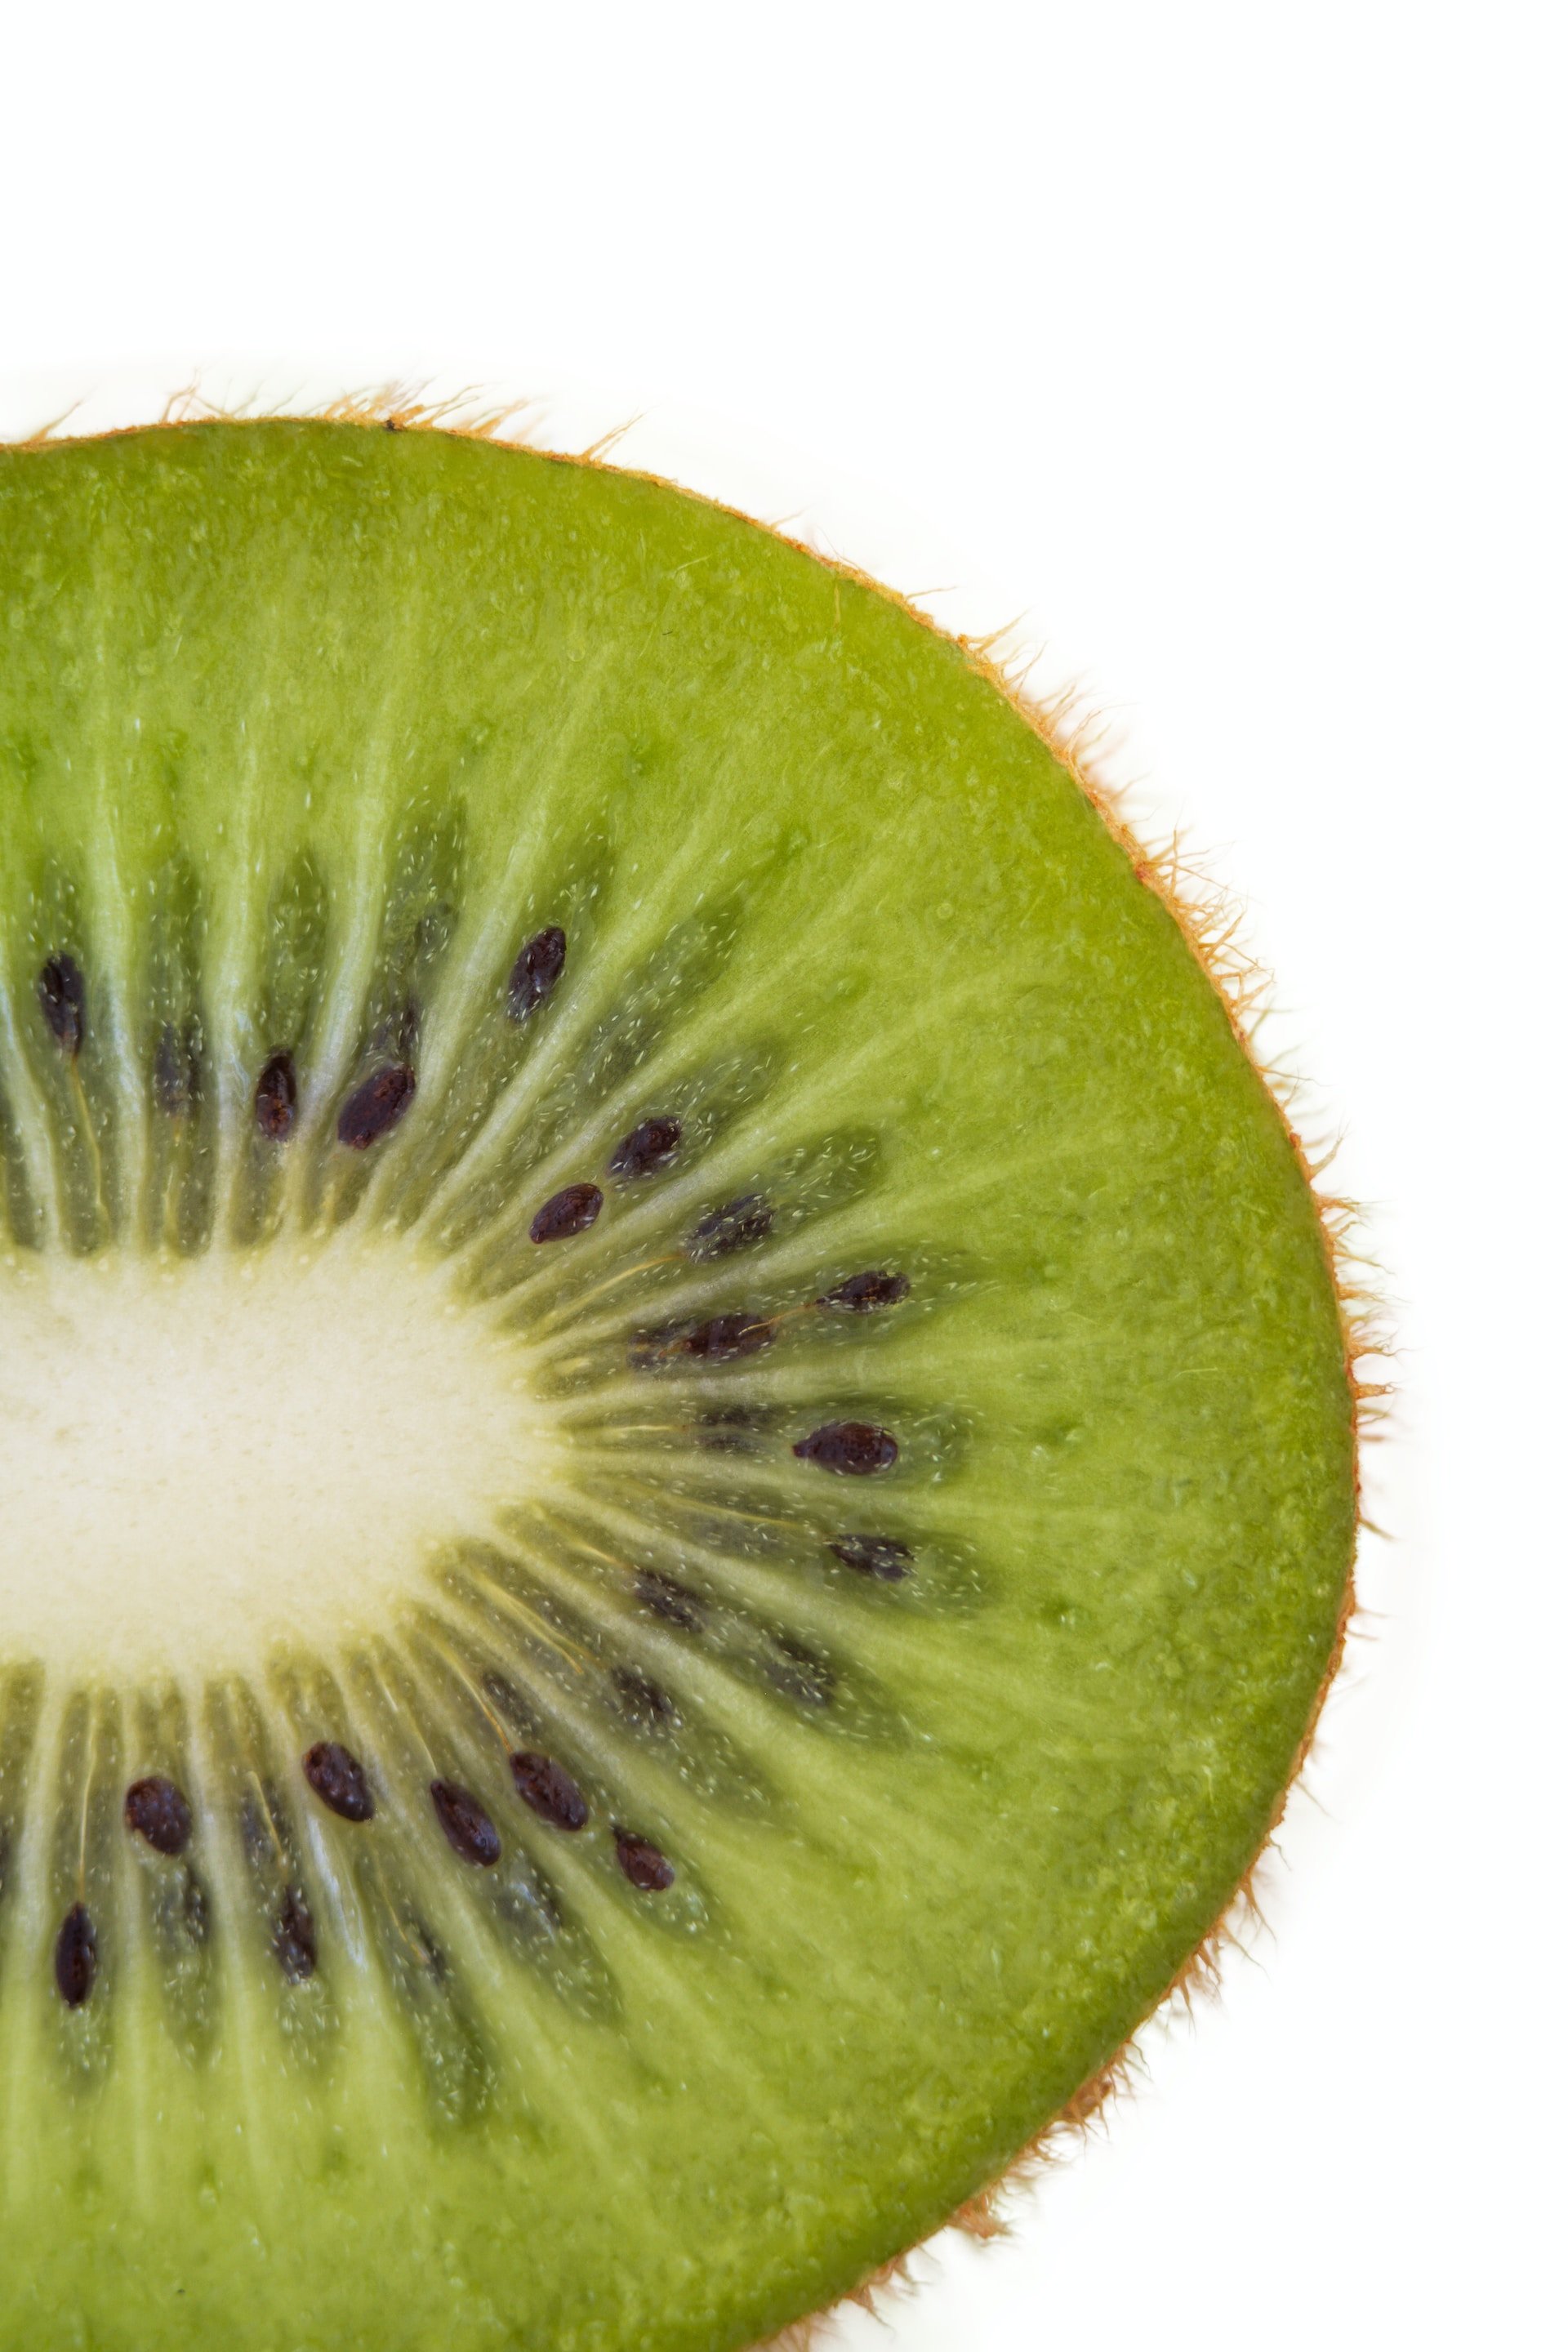 Funciona la dieta del kiwi?